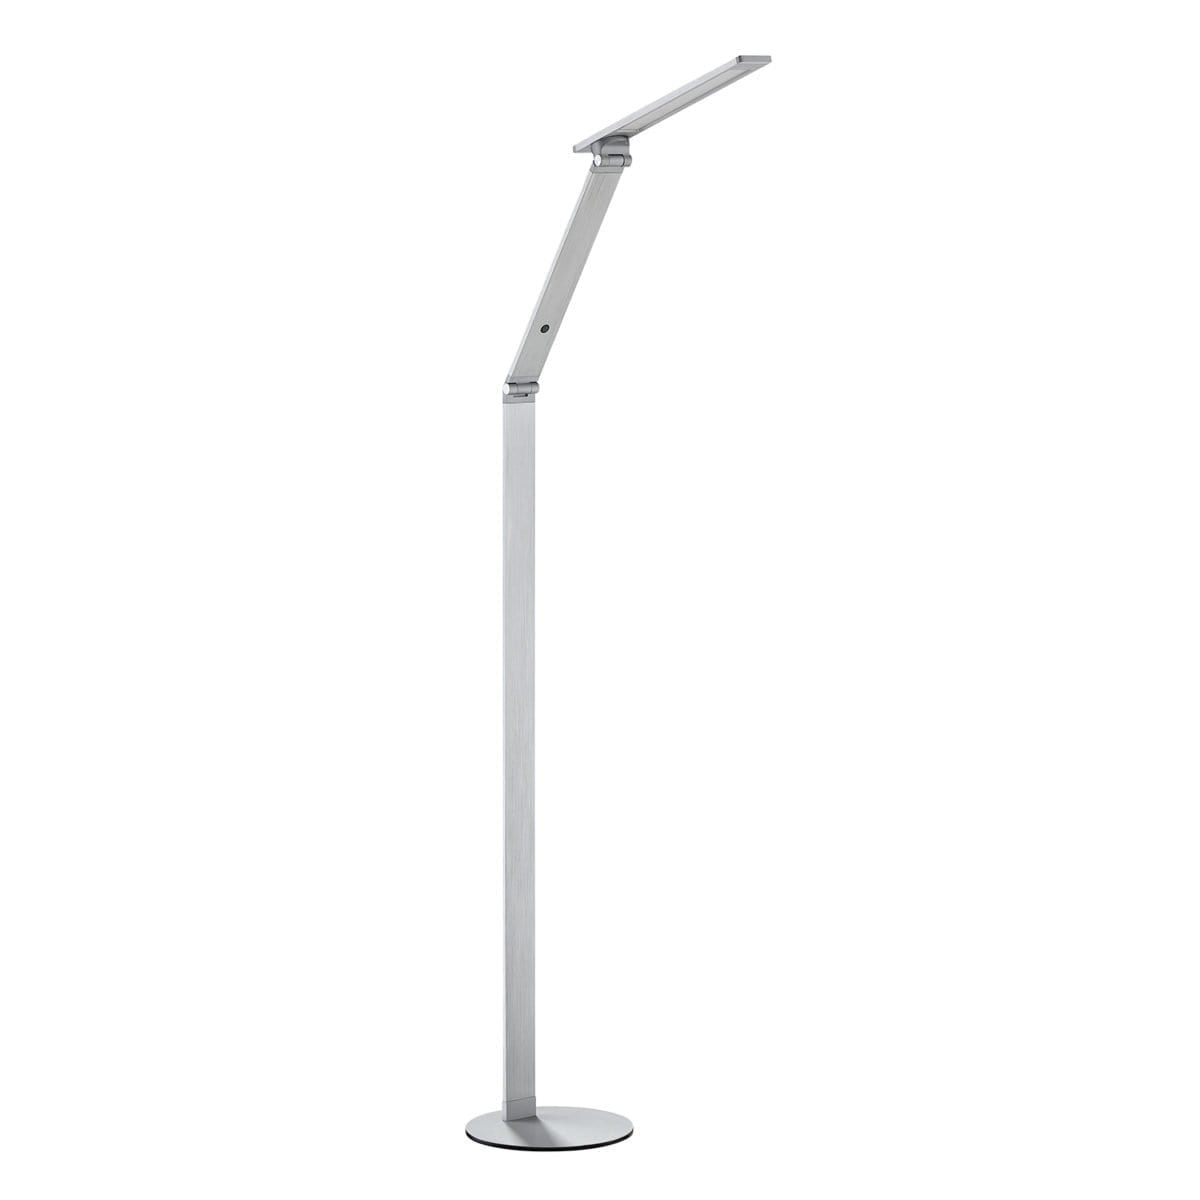 148 FL5002 BA
LED Floor Lamp availible in
Brushed Aluminum, Black, or
Russet Bronze
Regular Price $453.99
Sale Price $317.99